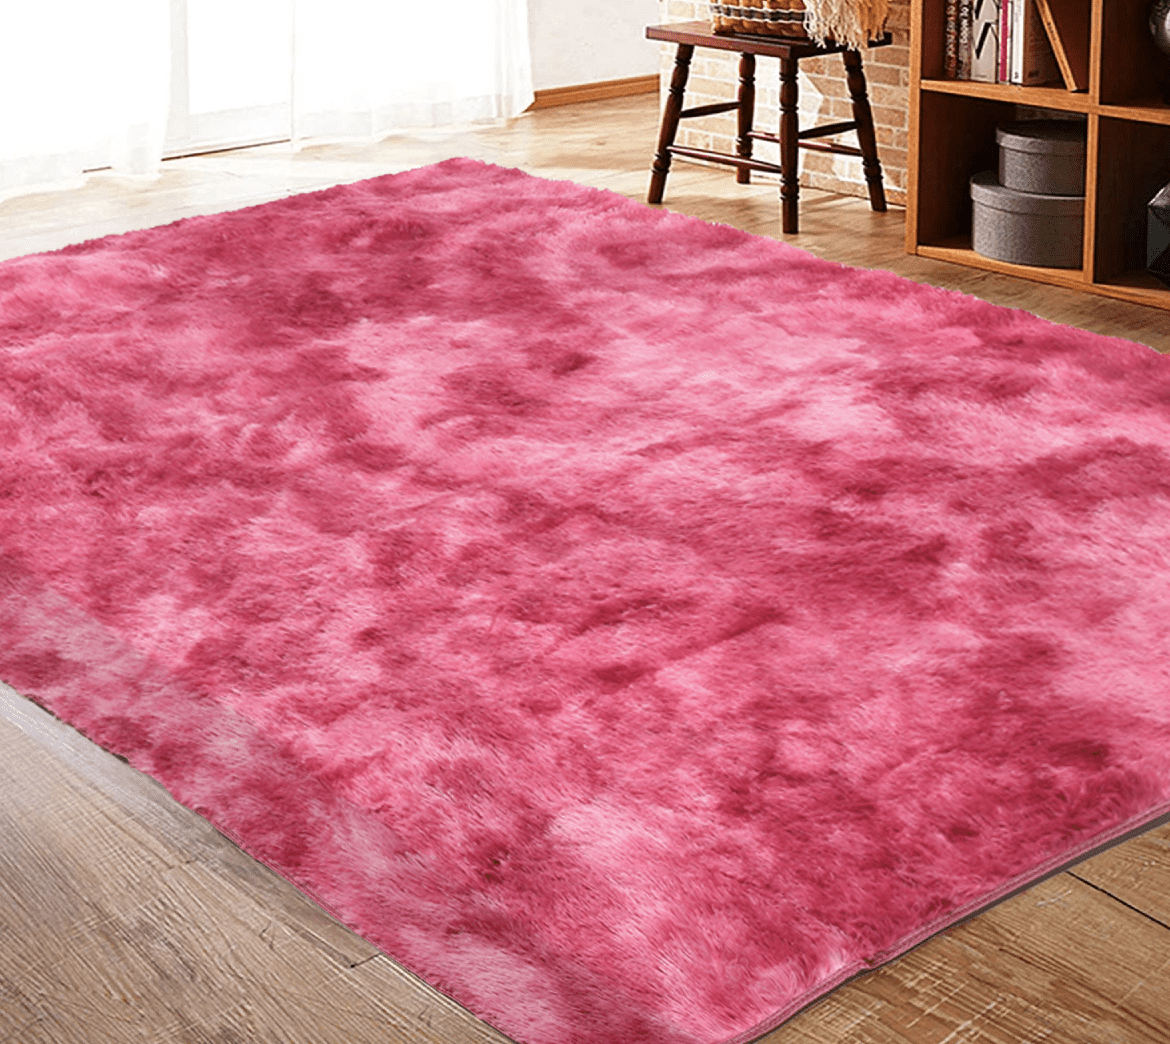 Blackpink 5 Carpet Non Slip Floor Carpet,Area Rug,Teen Carpet 